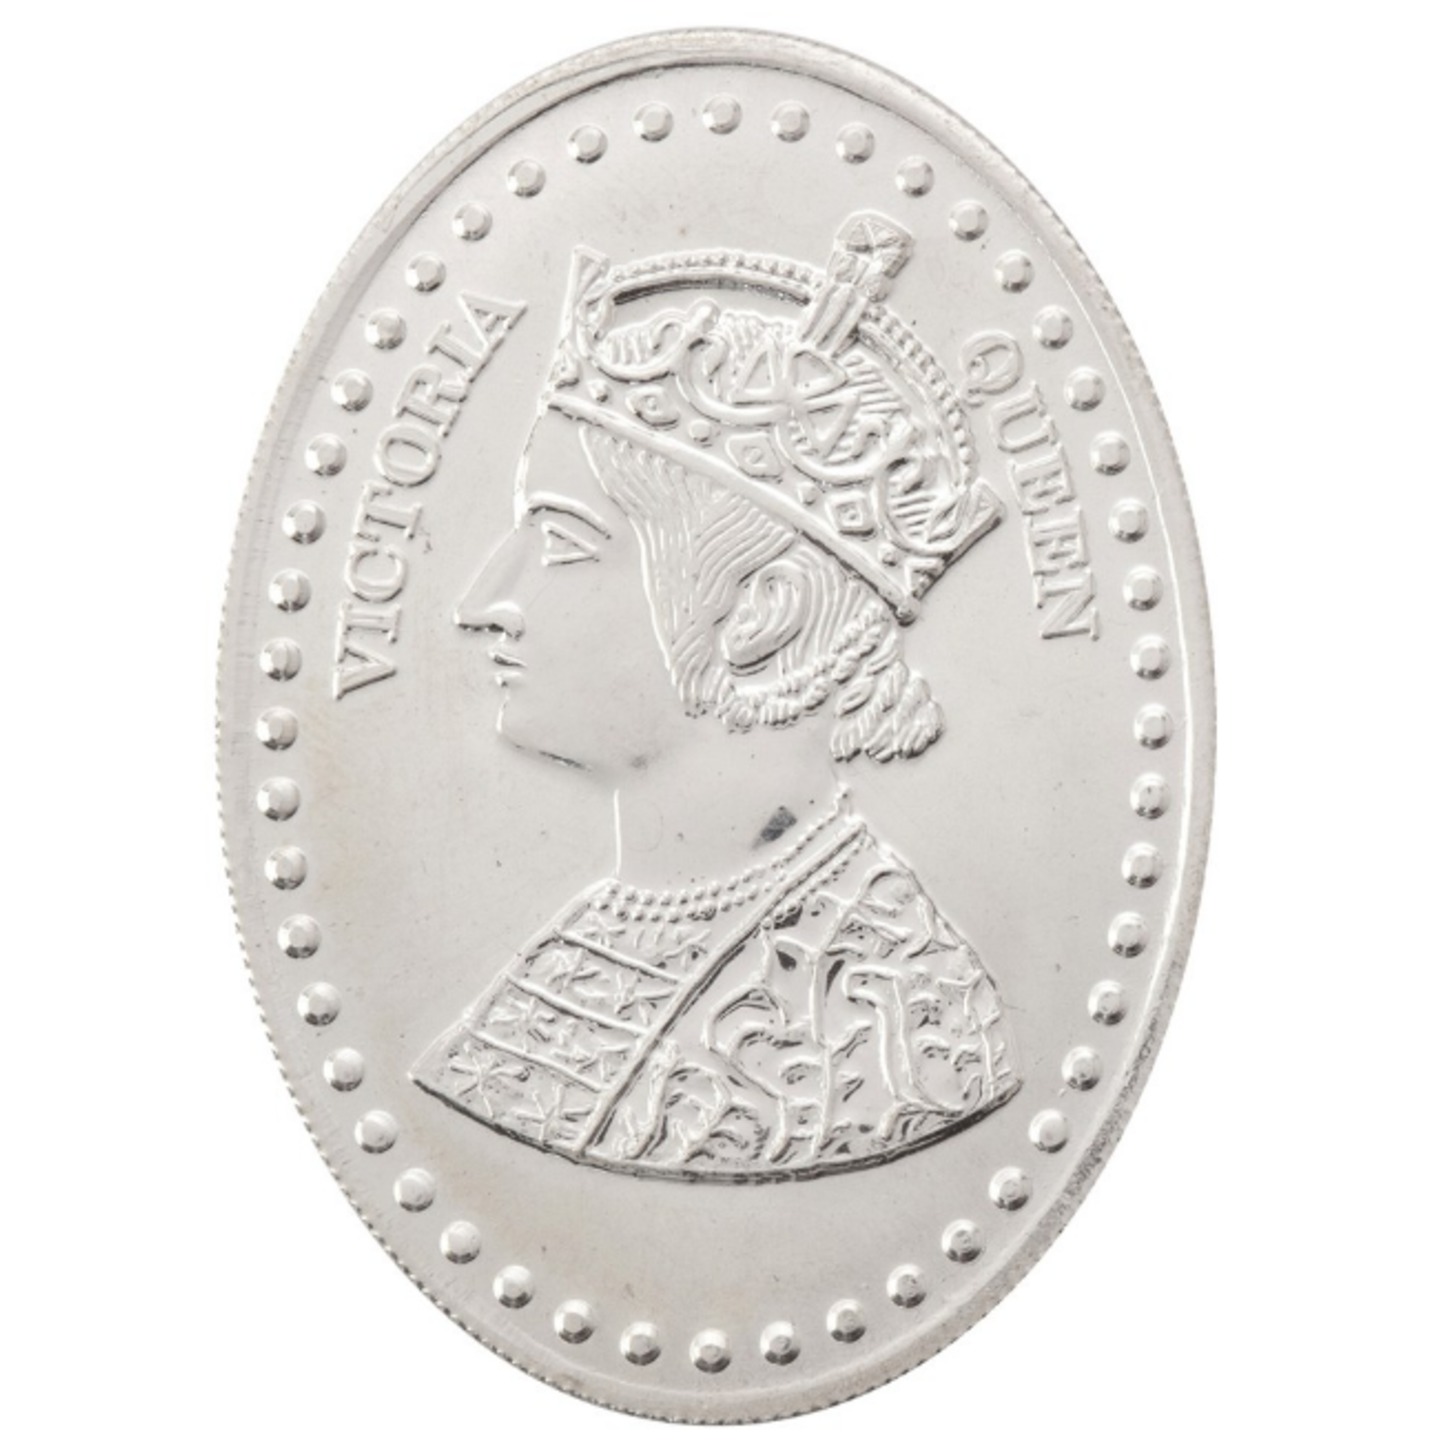 Silver Coin Victoria Queen 20 Gm 999 BIS Purity Hallmark